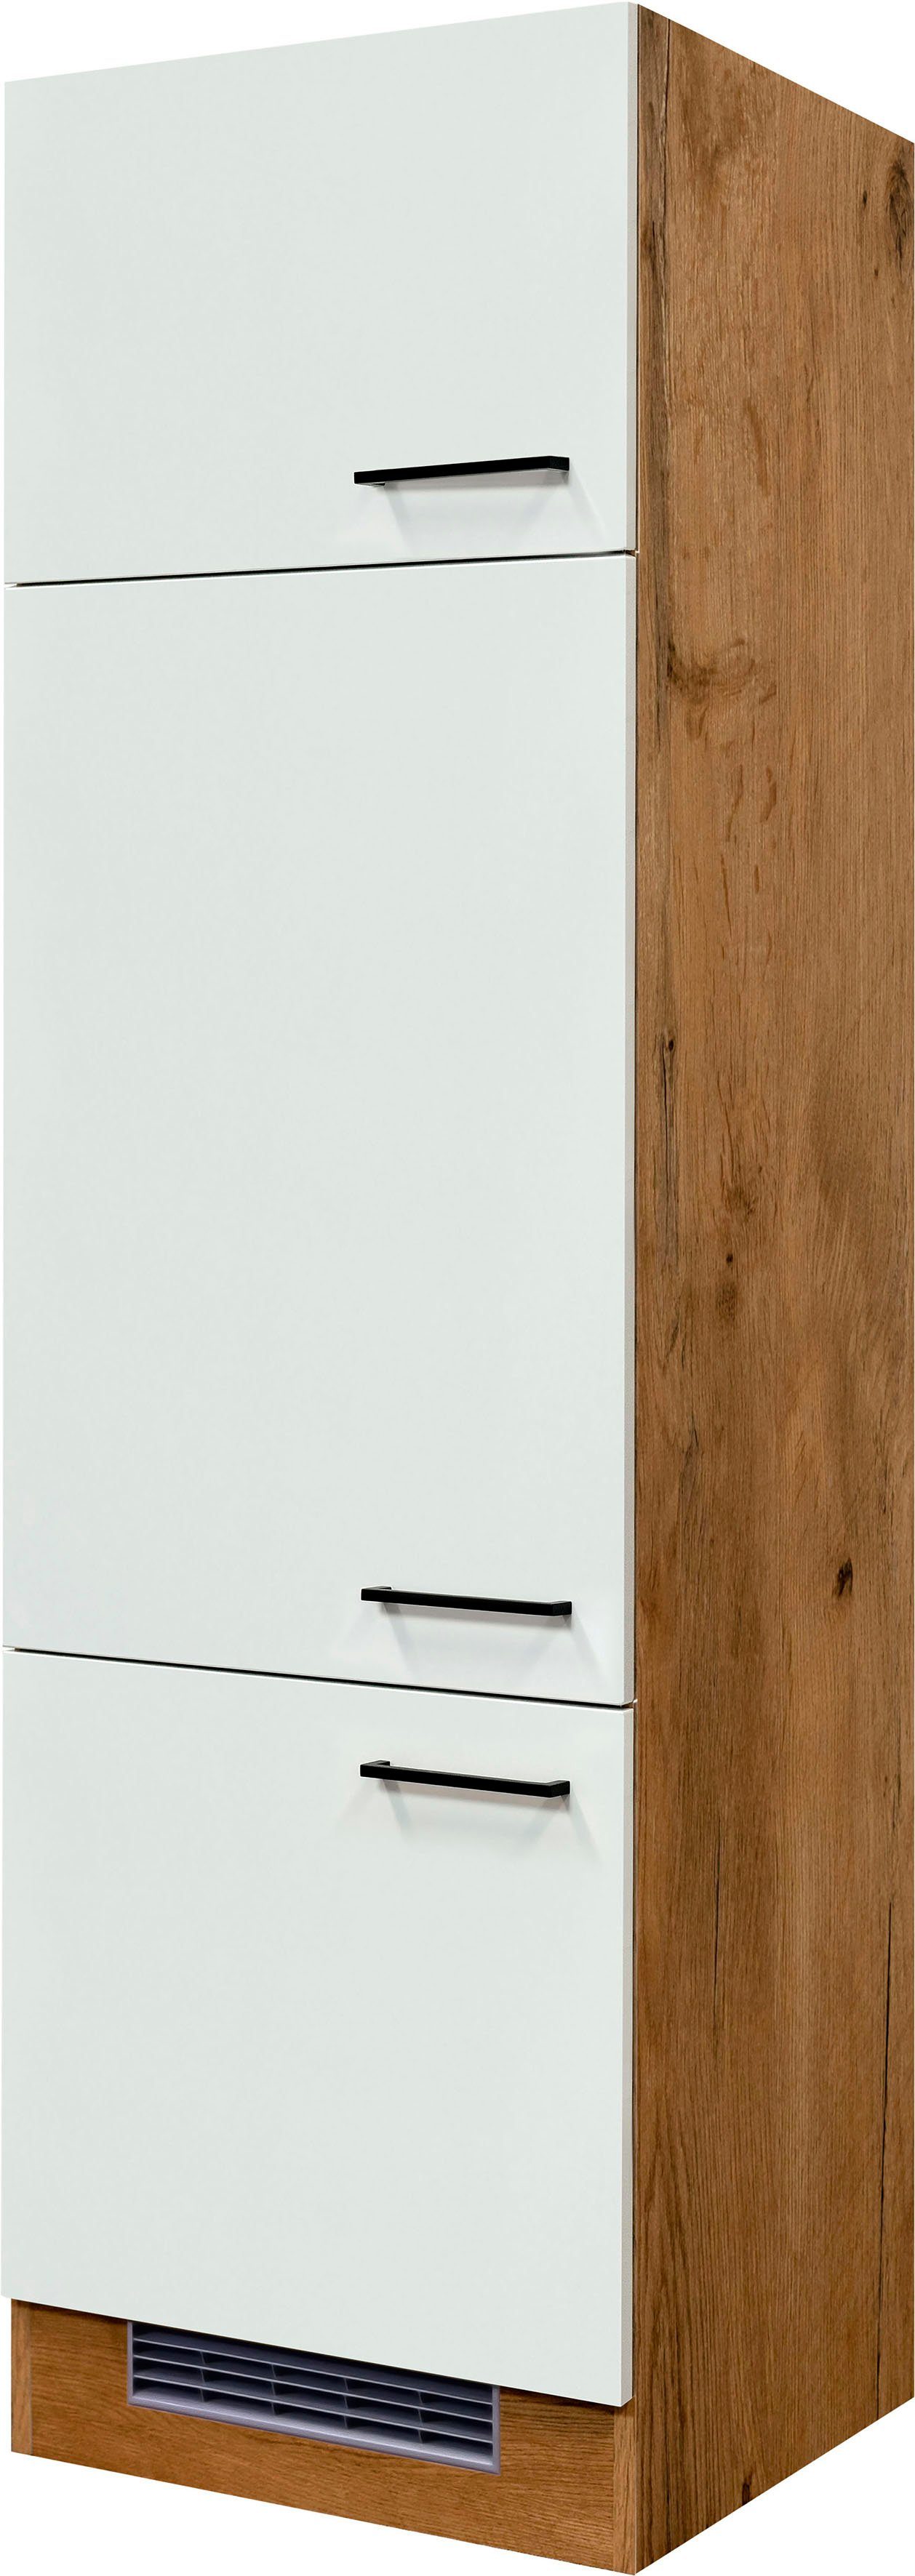 Flex-Well Küche Vintea, 60 cm Kühlschrank hoch, breit, cm inklusive 200